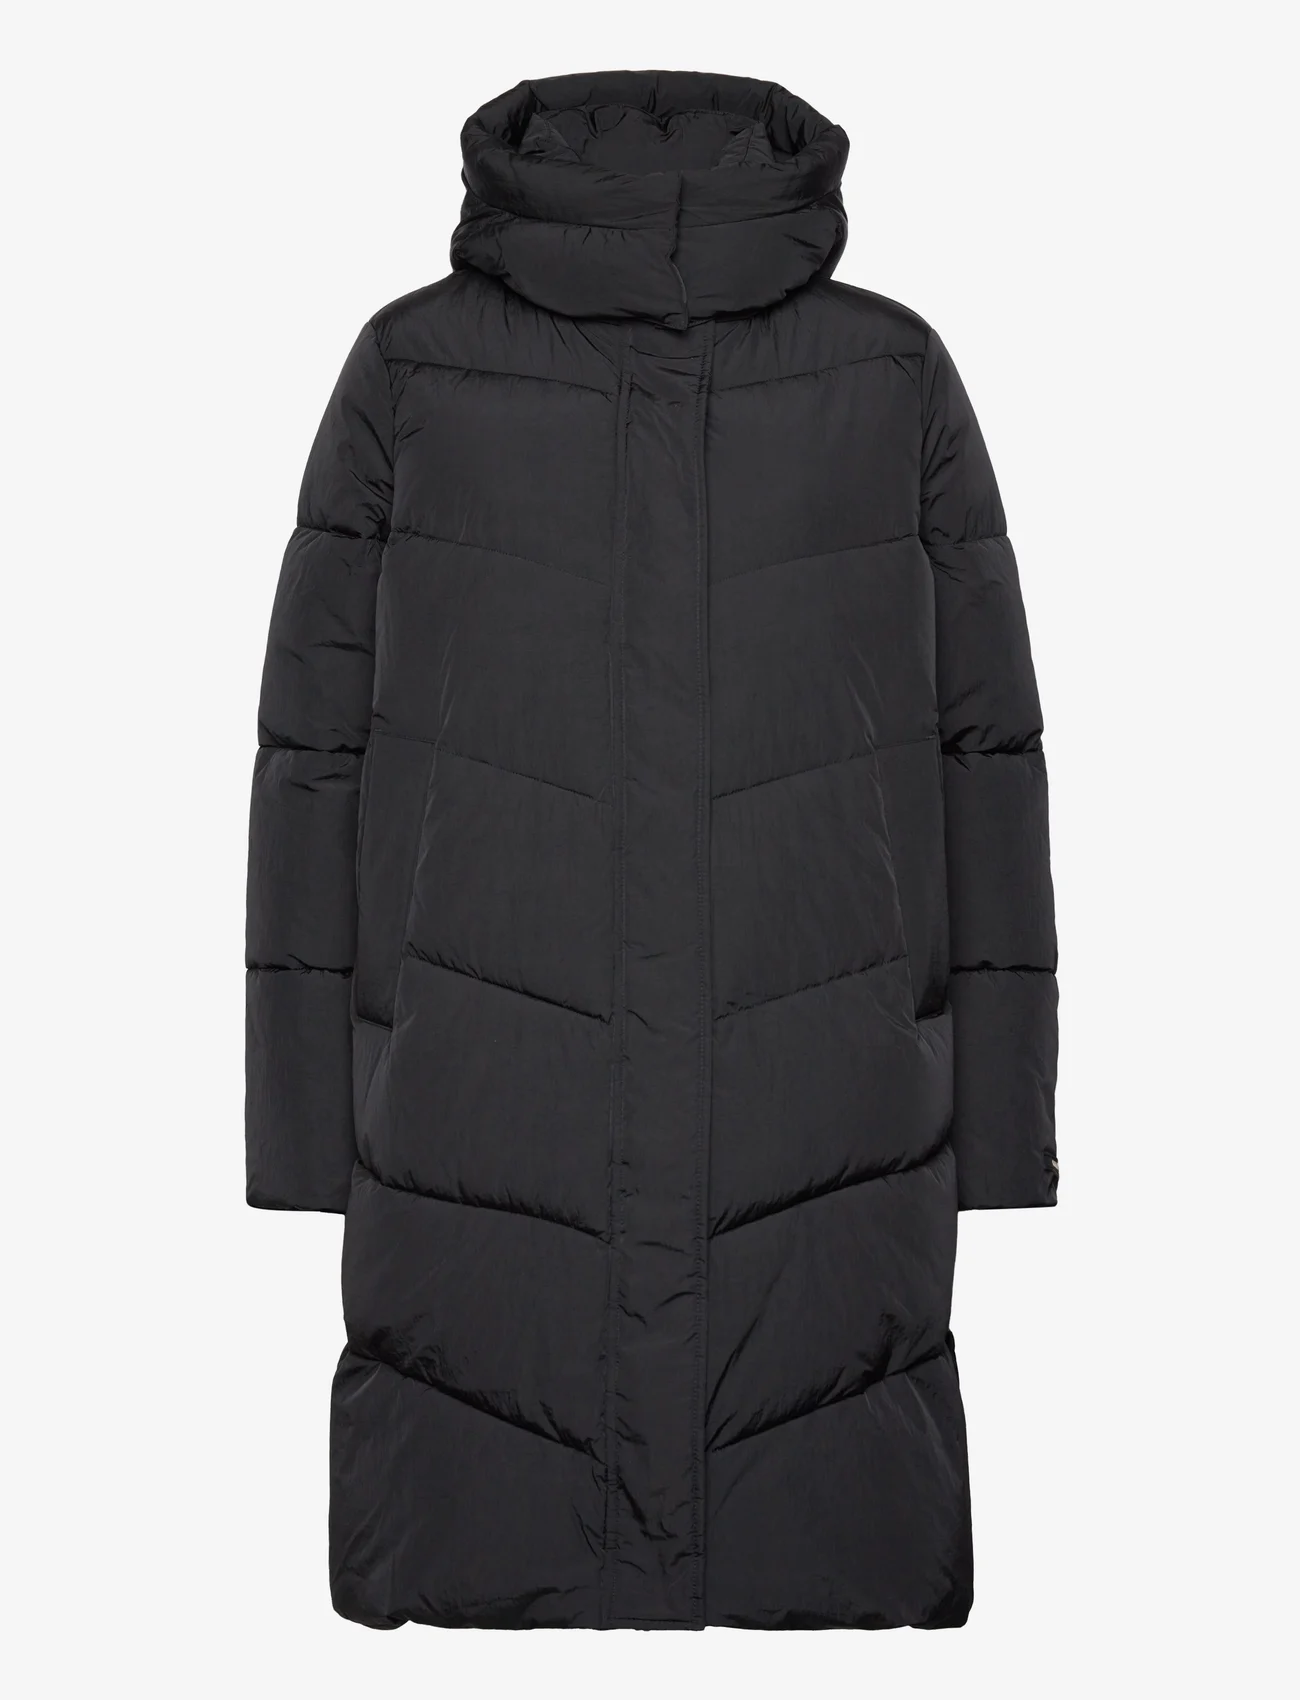 Calvin Klein - MODERN PADDED COAT - winter coats - ck black - 0